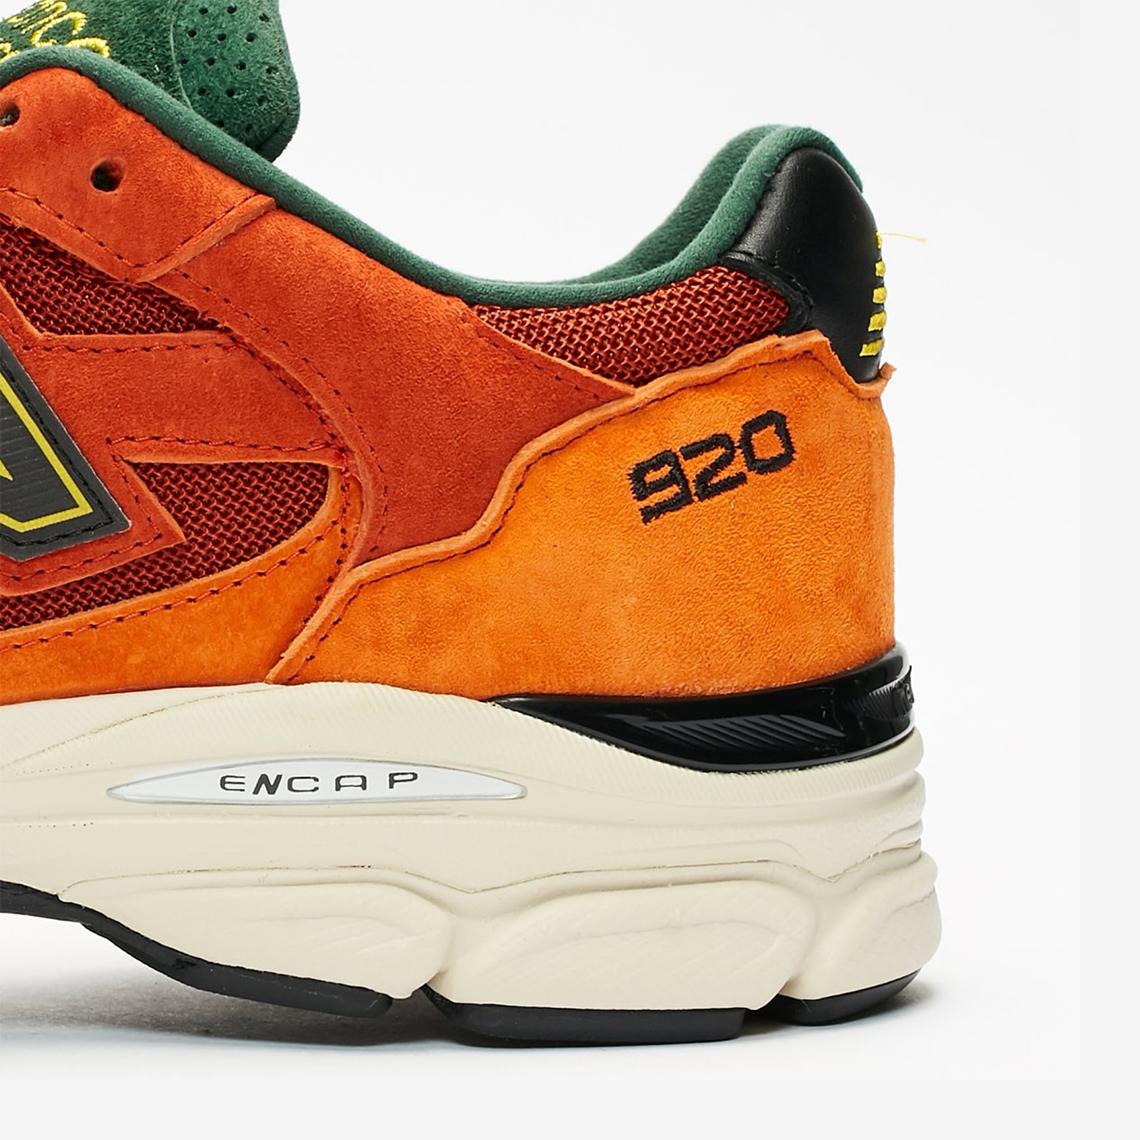 Sns New Balance 920 Orange Green Release Date 5